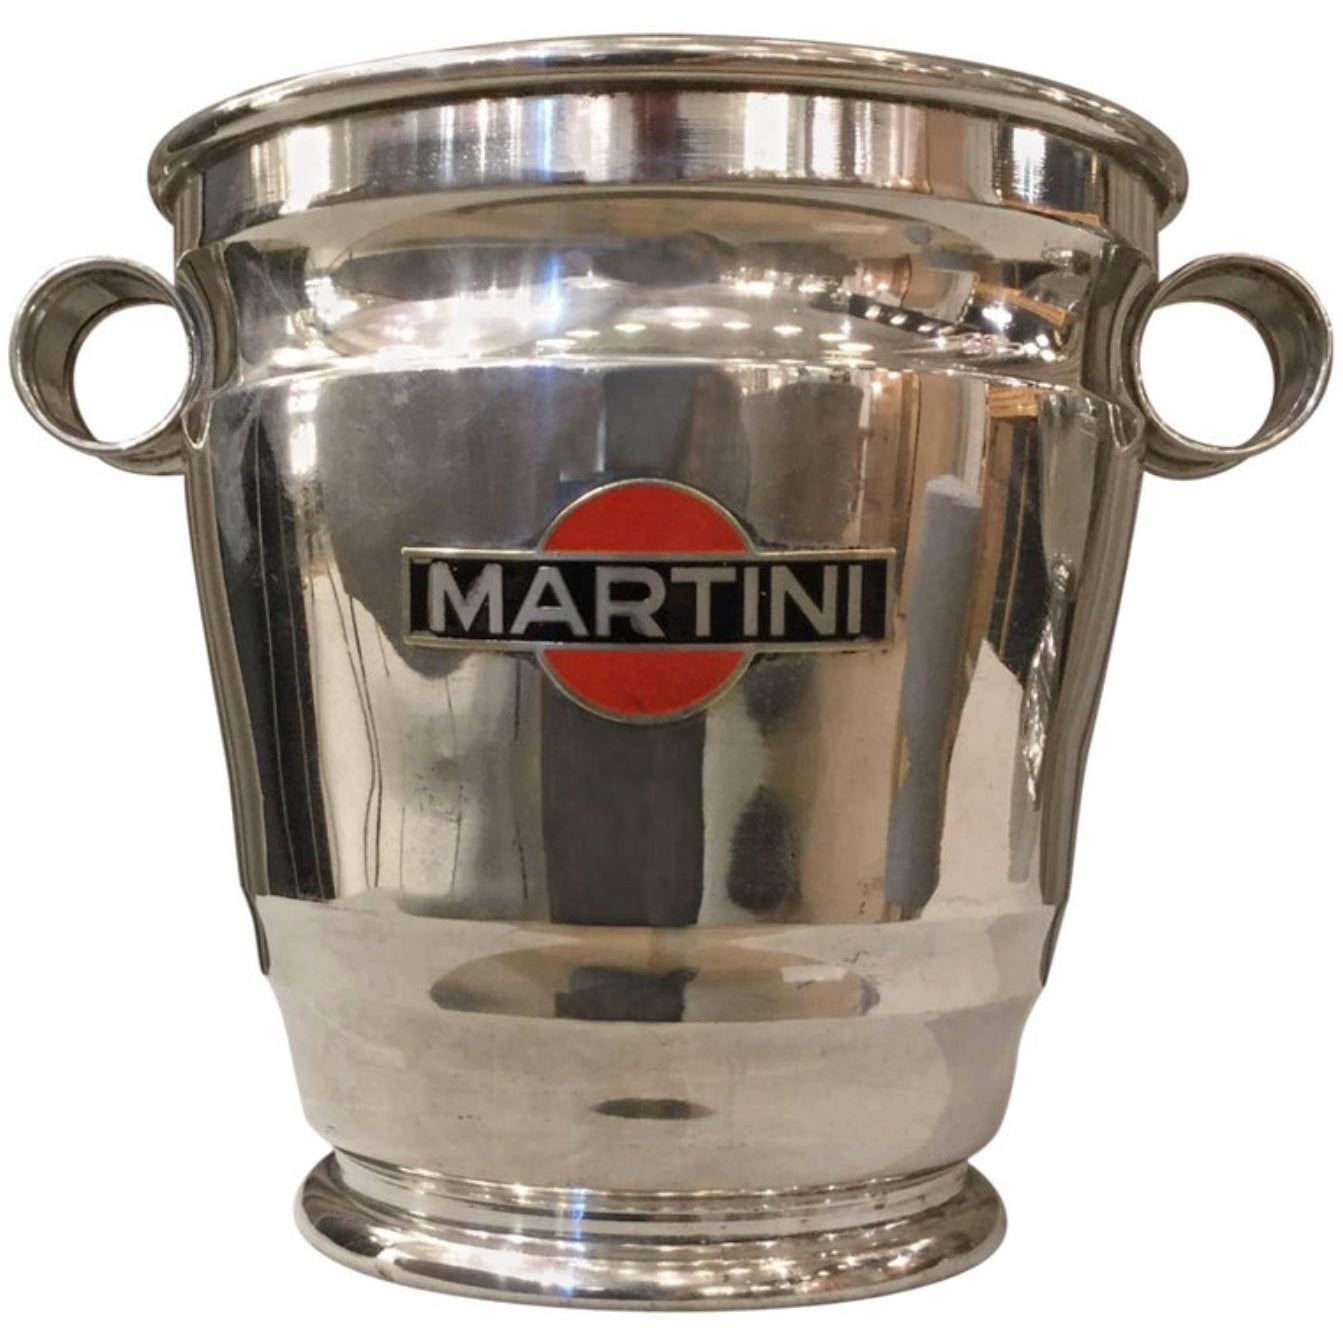 Martini Bucket/Cooler, 1960s